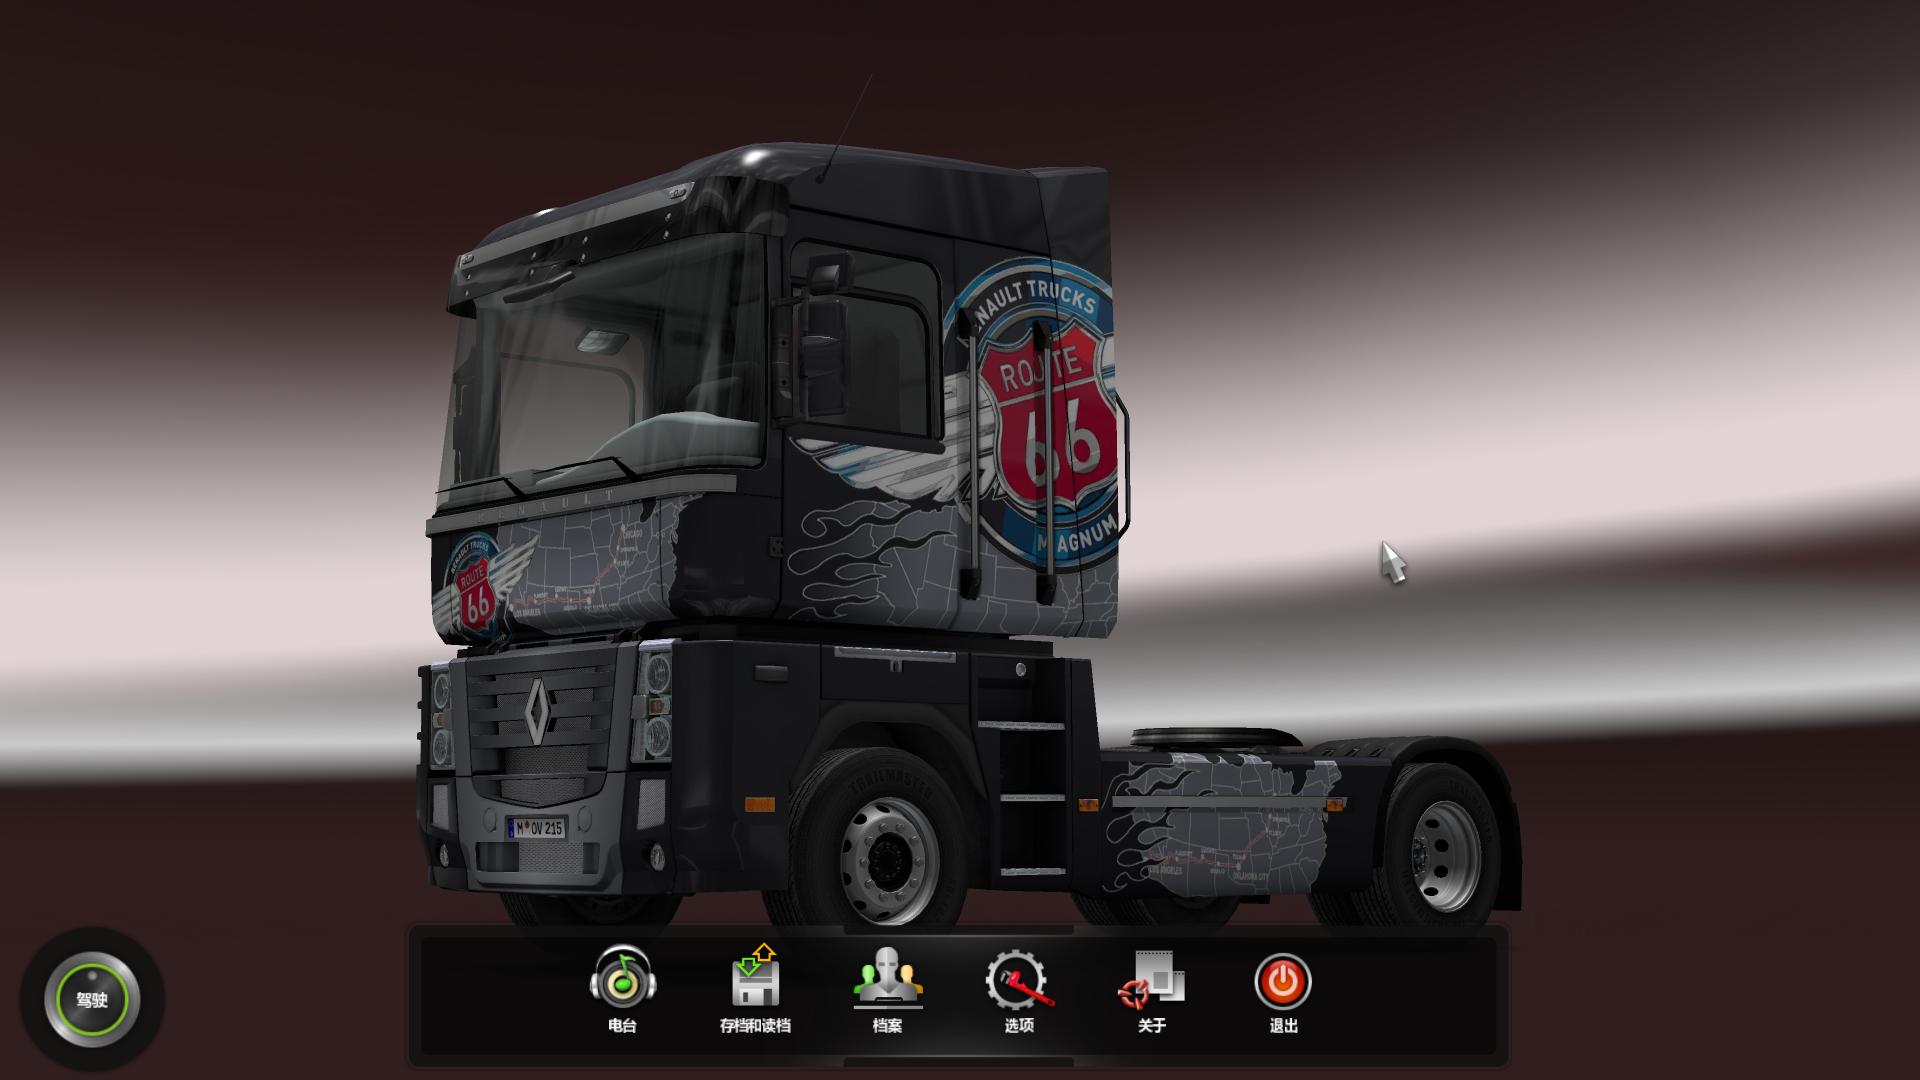 ŷ޿ģ2Euro Truck Simulator 2ɫMOD